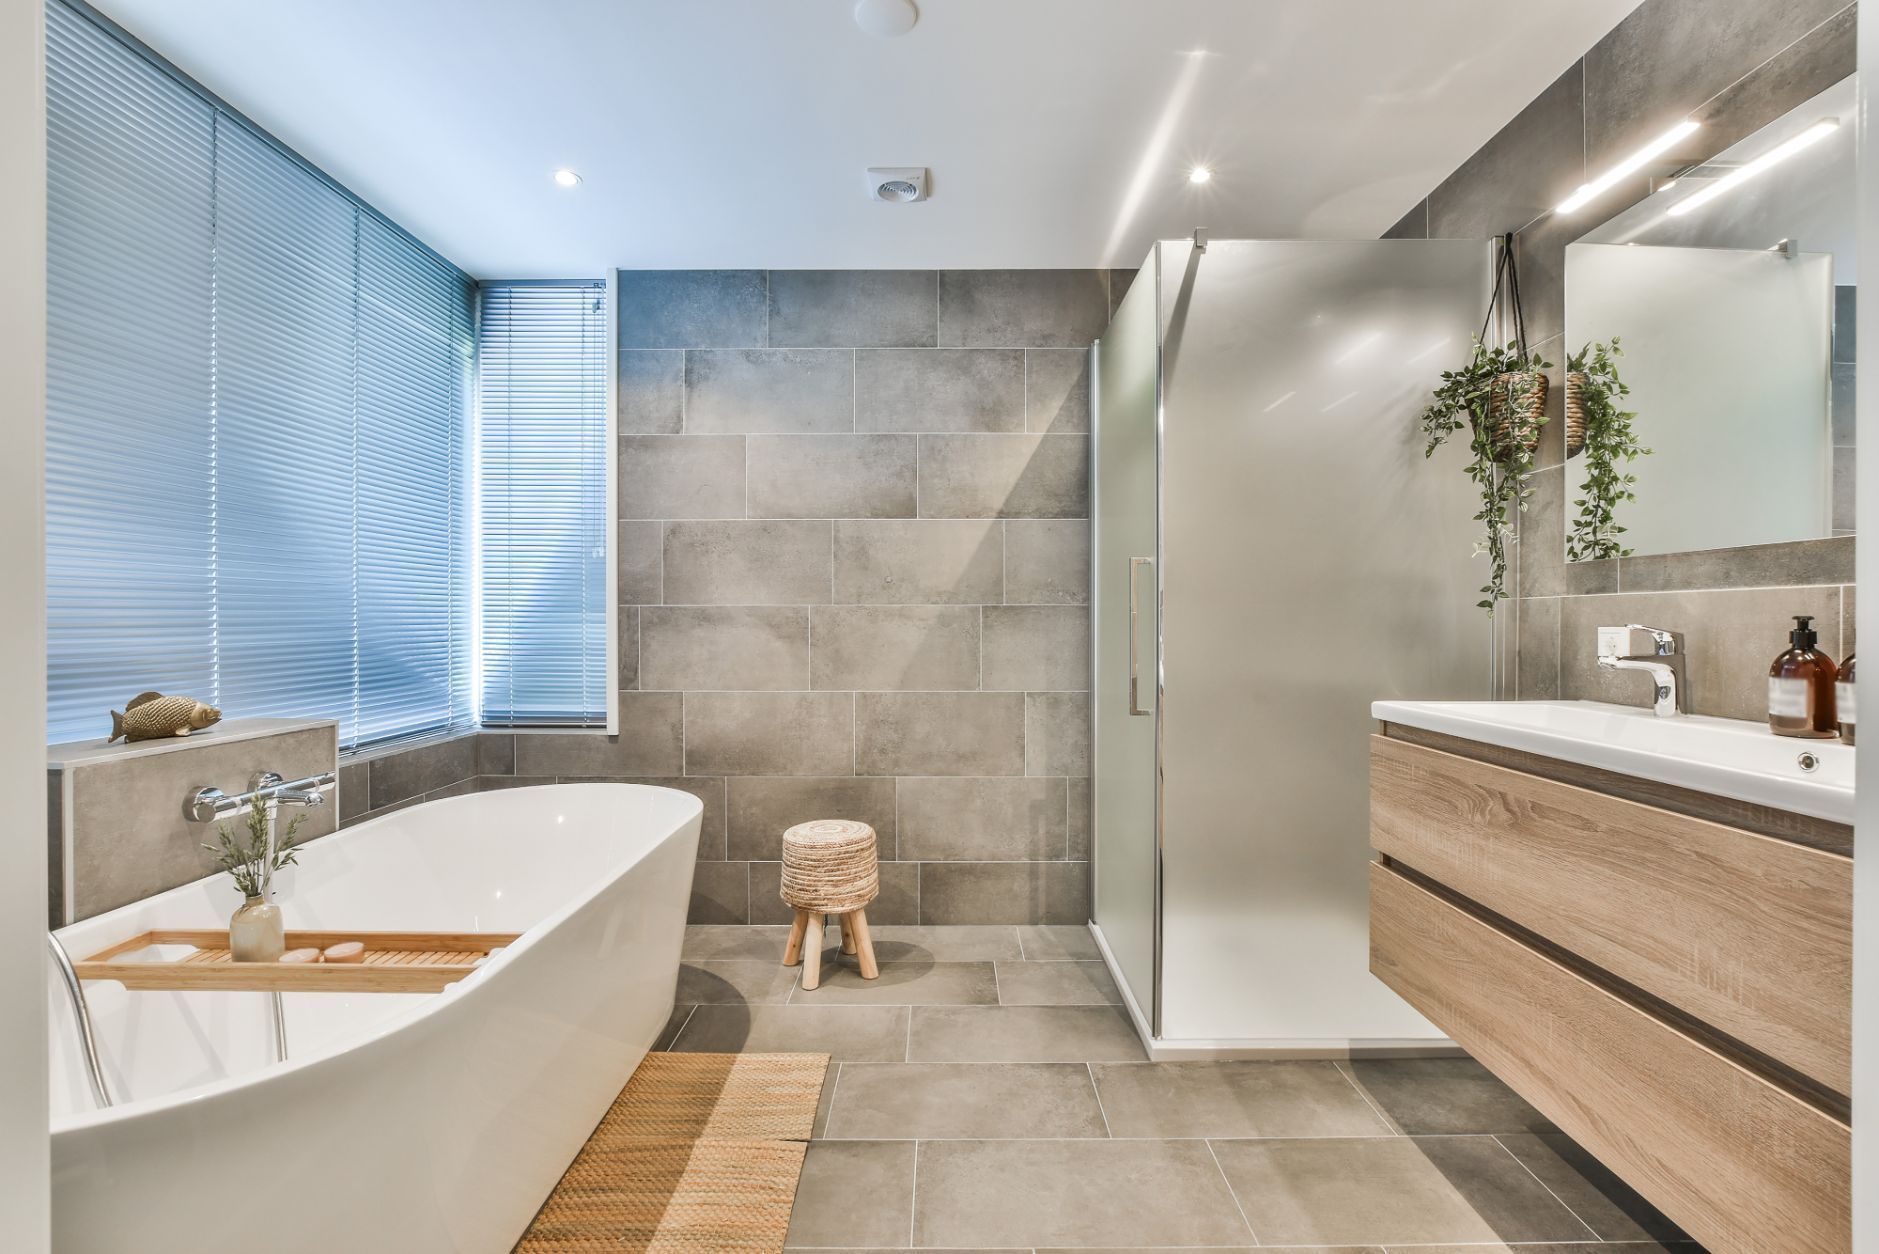 15 Amazing Bathroom Interior Design Ideas & Photo Gallery